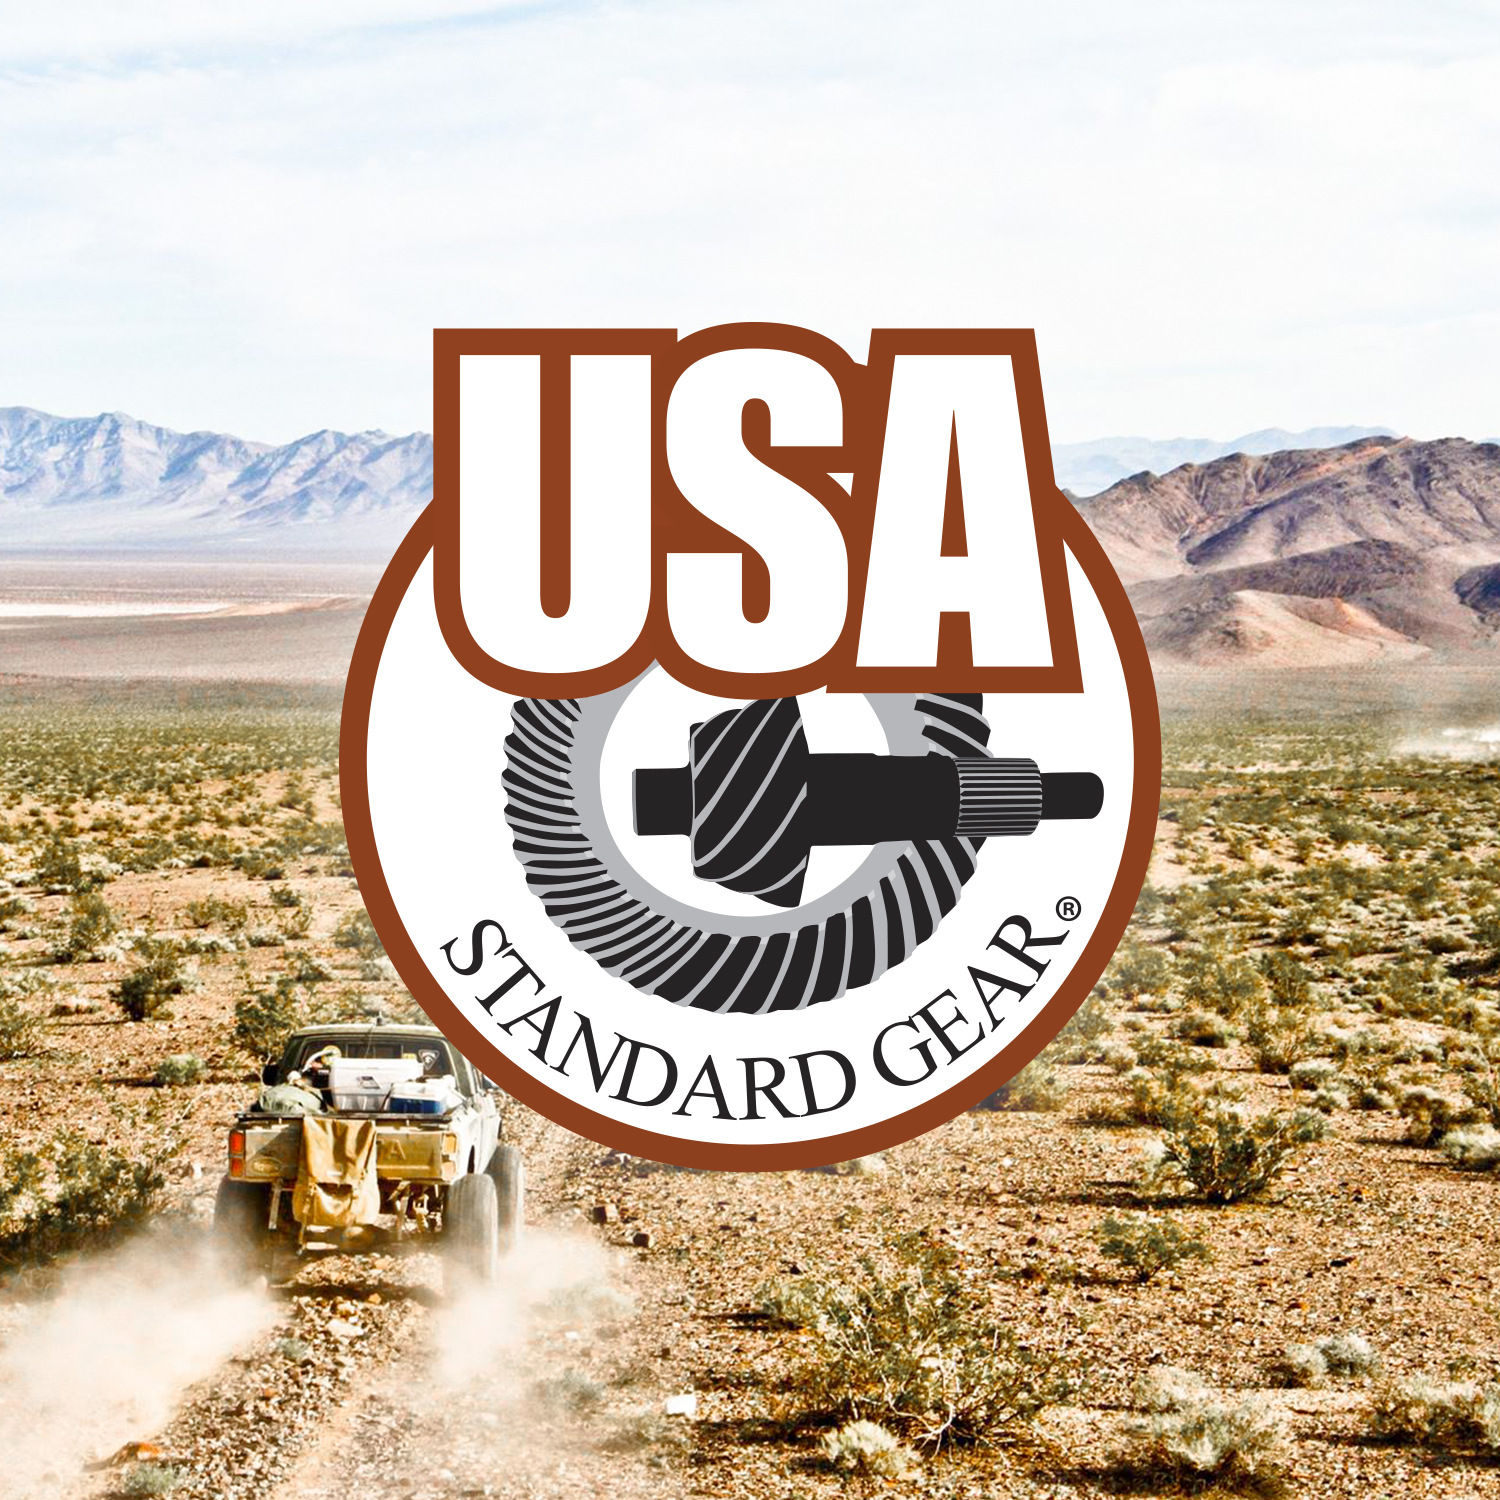 USA Standard Gear Rear Driveshaft for KIA Sorento, RWD, A/T, 60" Long